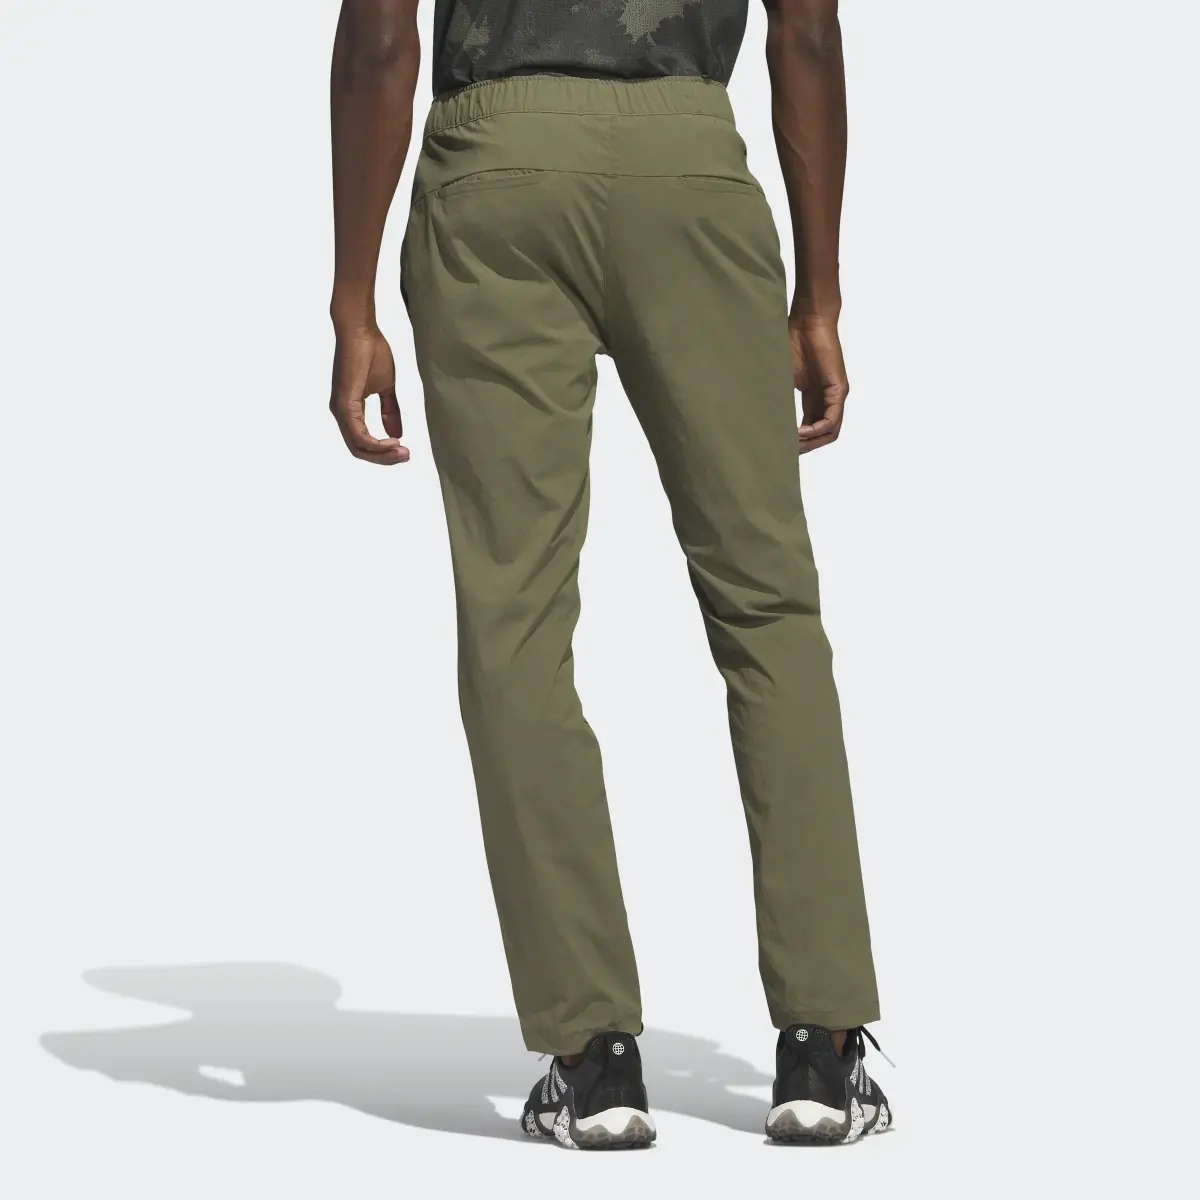 Adidas Ripstop Golf Pants. 2